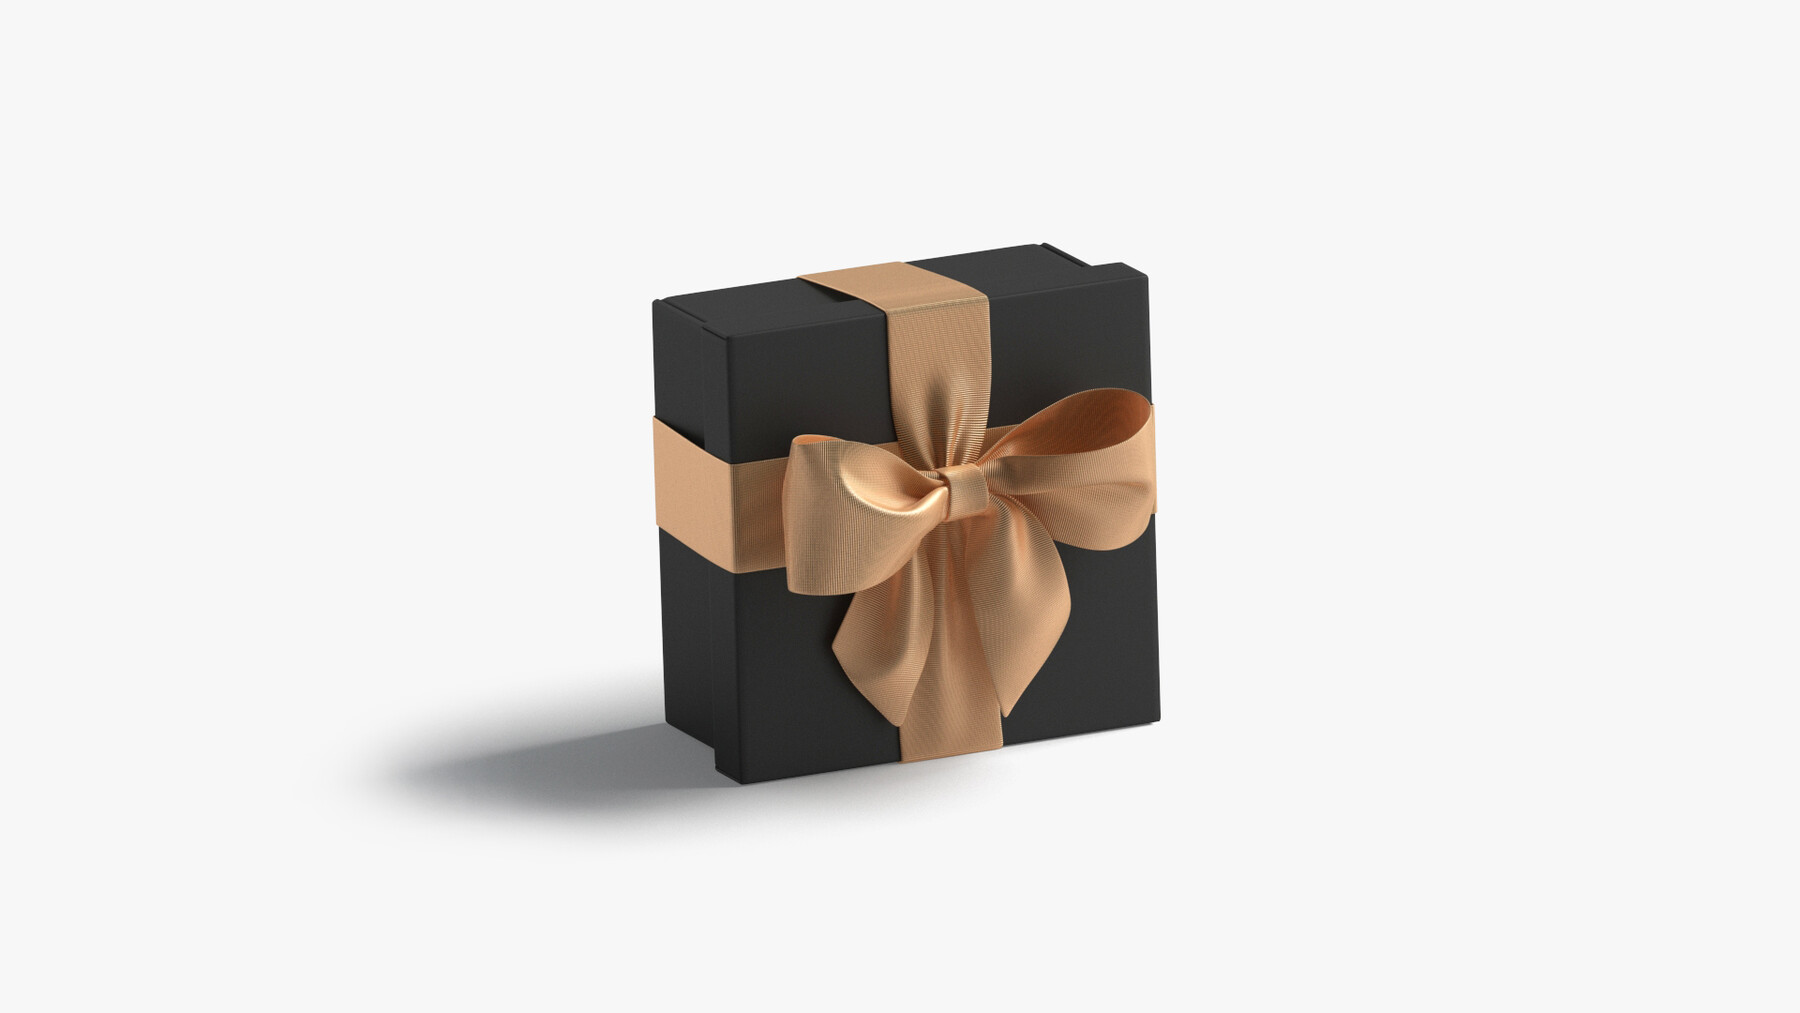 ArtStation - Gift boxes set - 3 box shapes | Resources